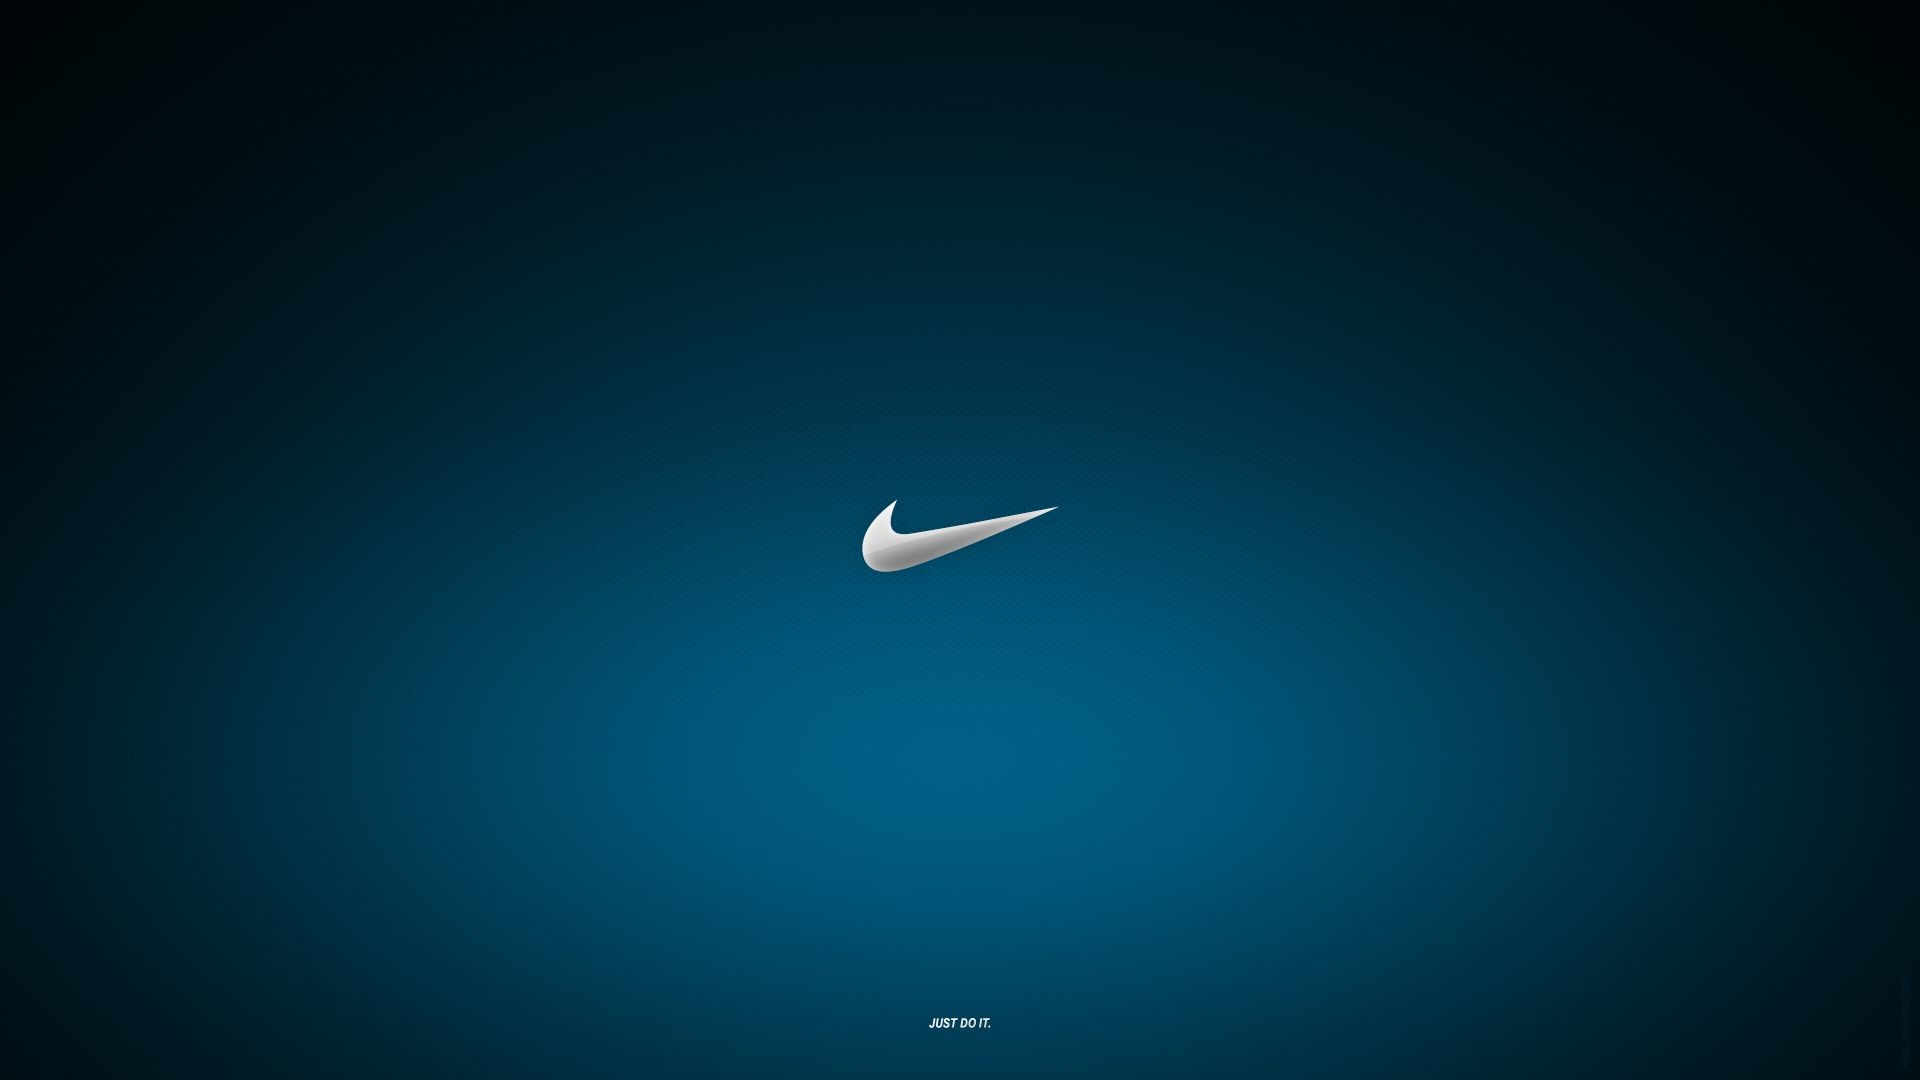 Nike 4k Wallpaper Download For Pc - Wallpaperforu